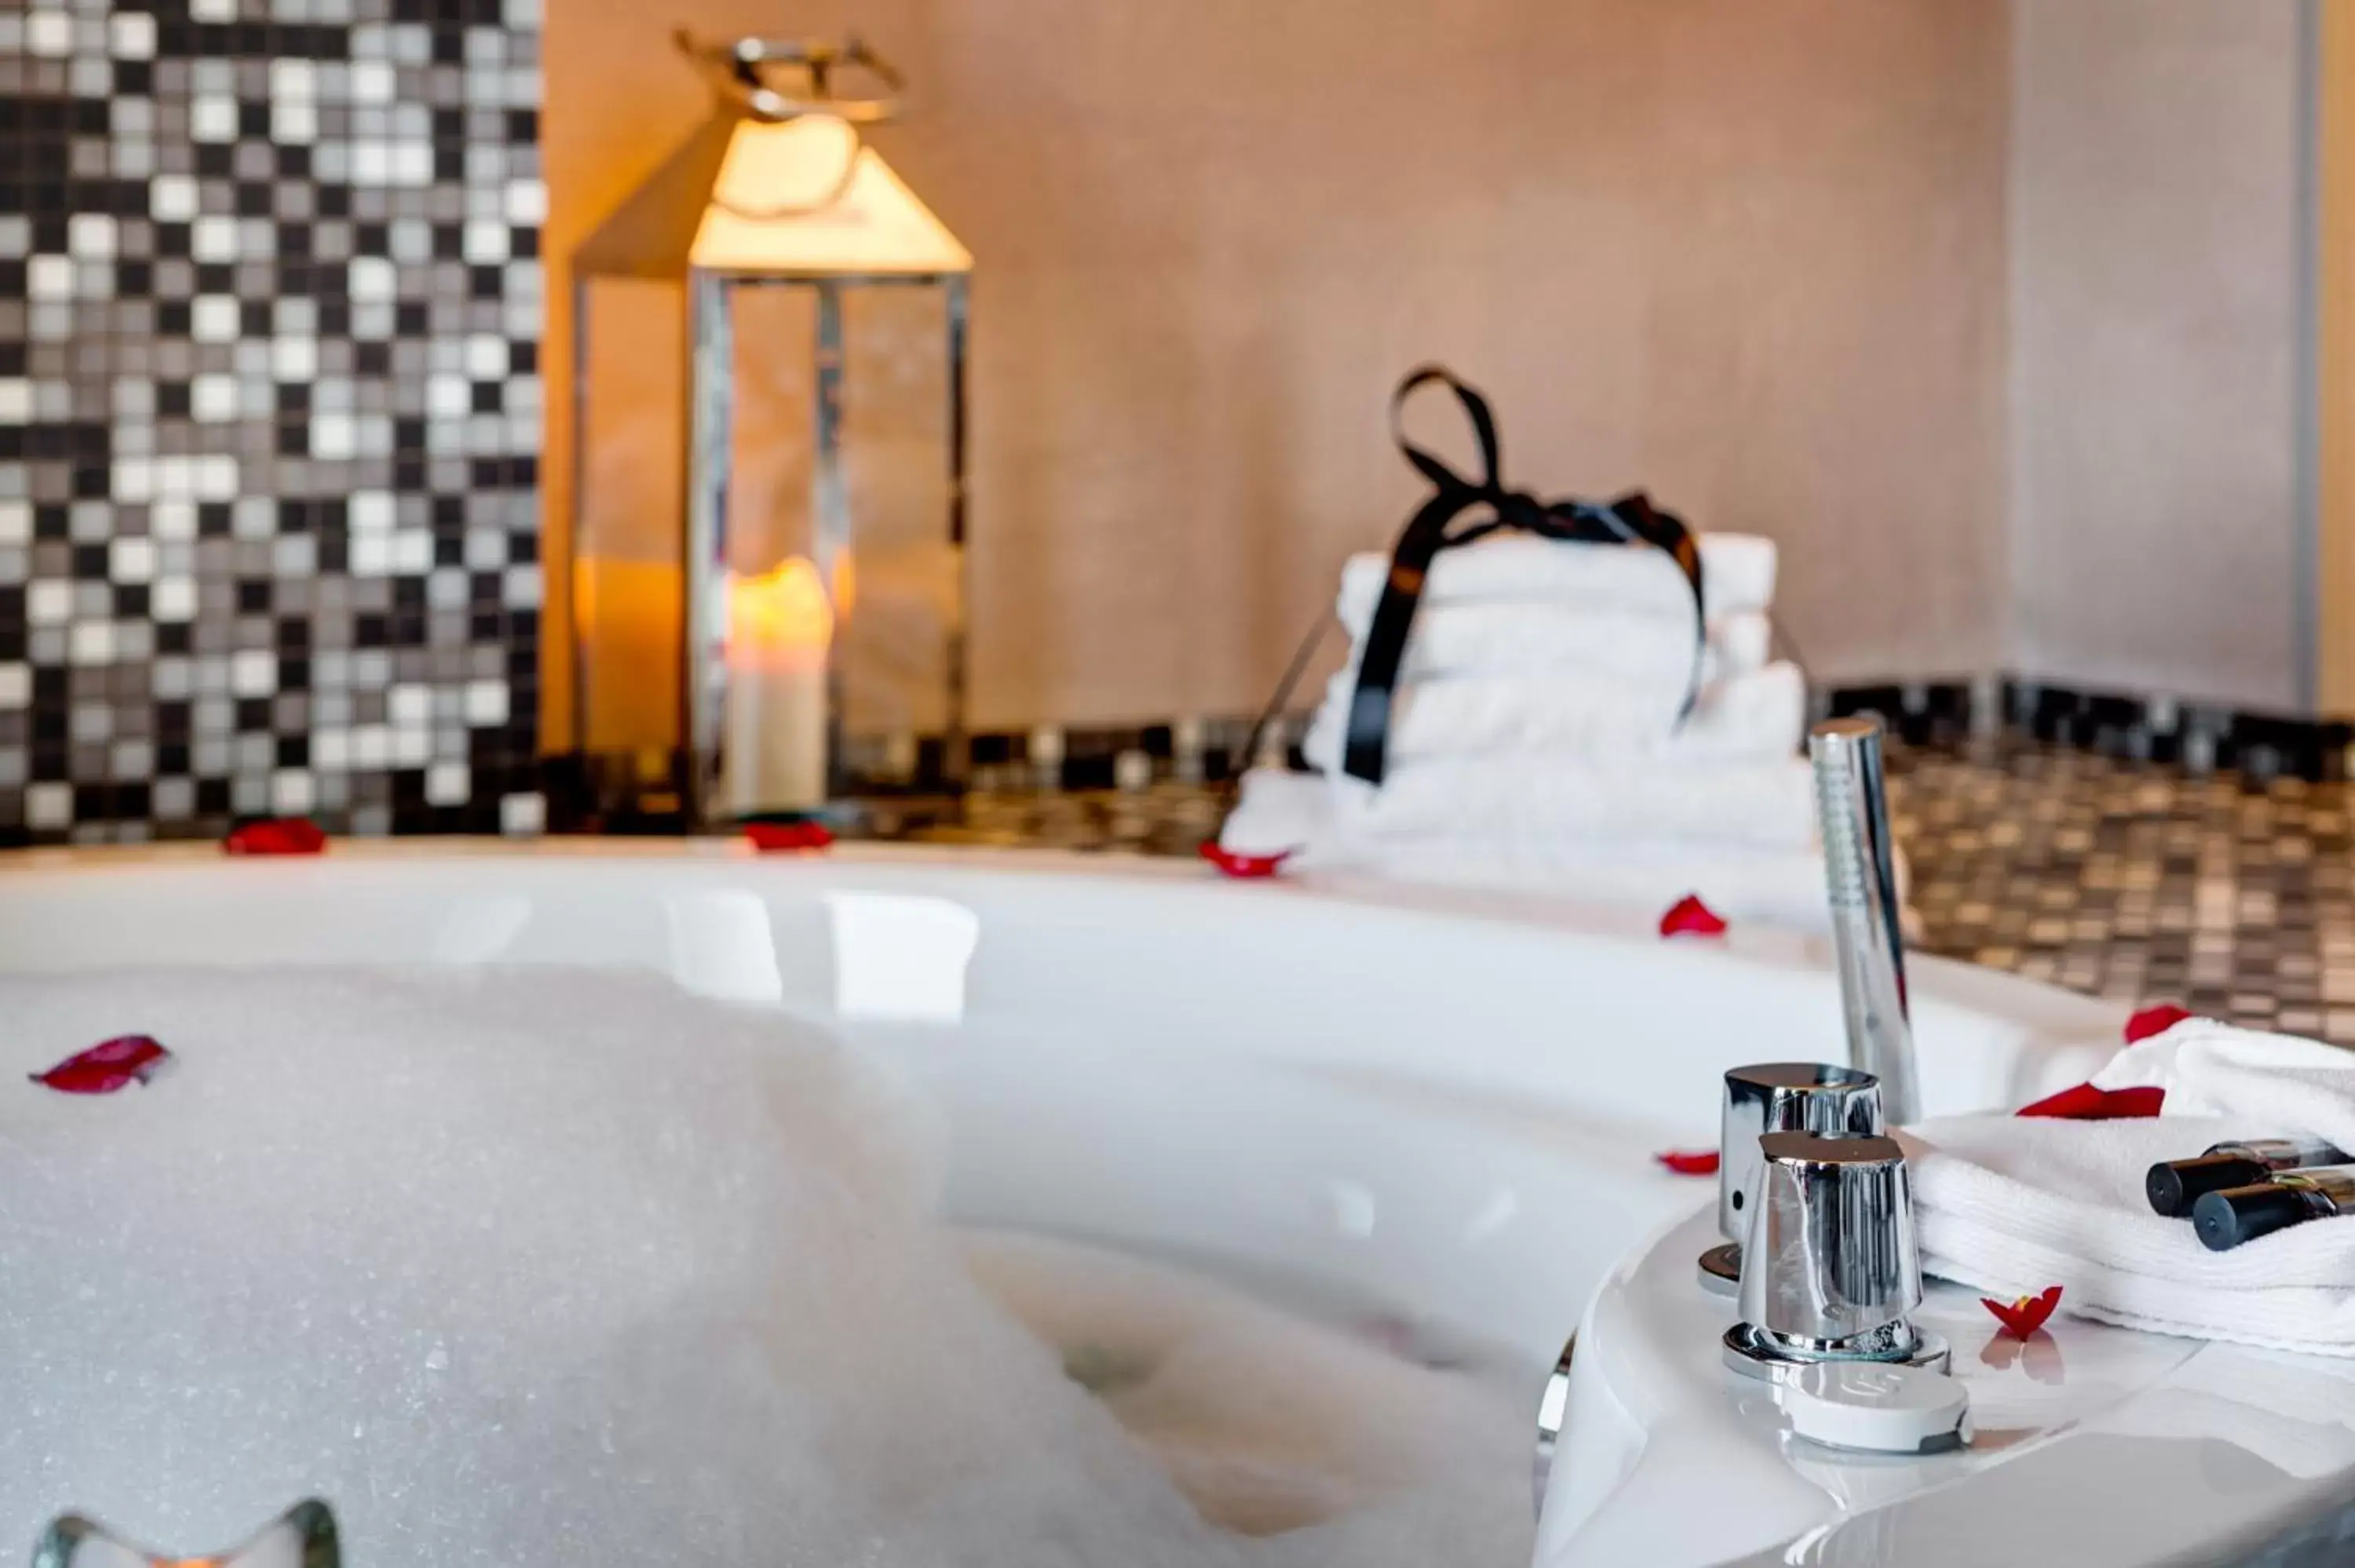 Hot Tub, Bathroom in Dharma Luxury Hotel